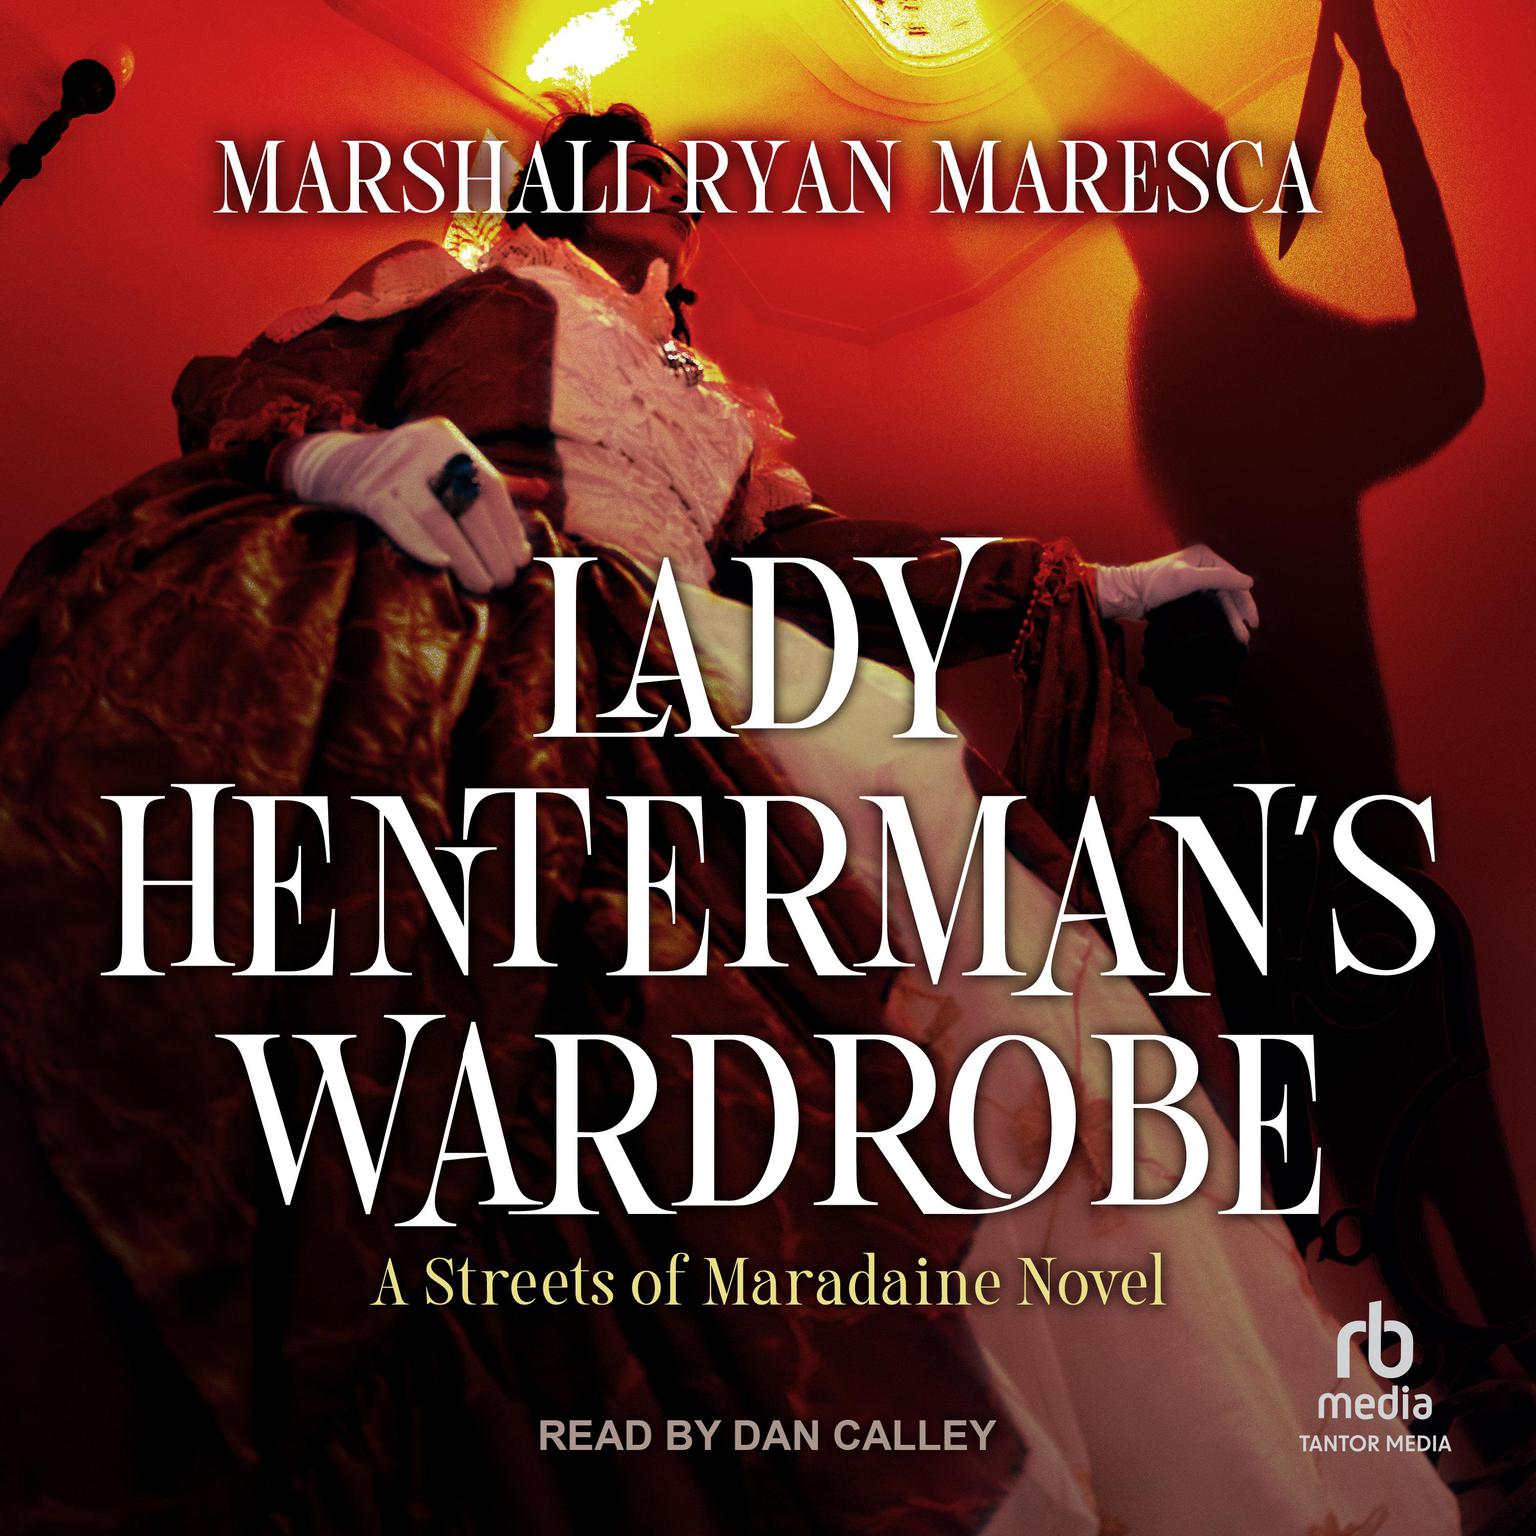 Lady Hentermans Wardrobe: A Streets of Maradaine Novel Audiobook, by Marshall Ryan Maresca